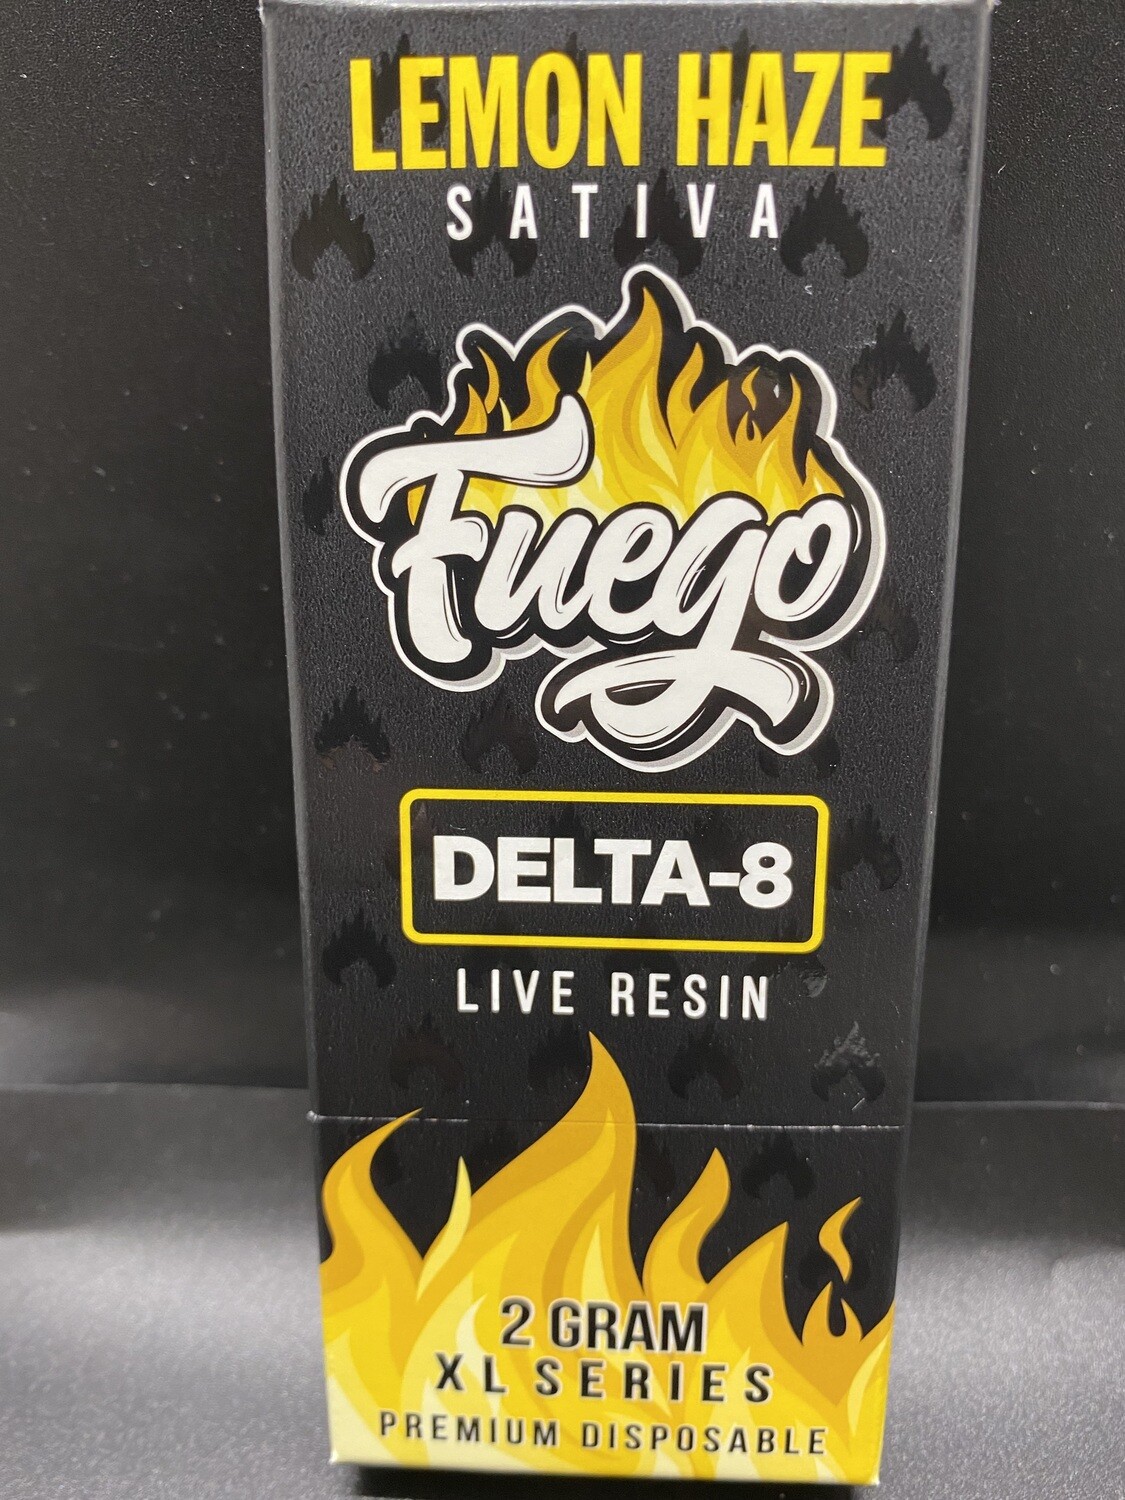 DISP - Fuego Live Resin Delta 8 Super Lemon Haze 2g